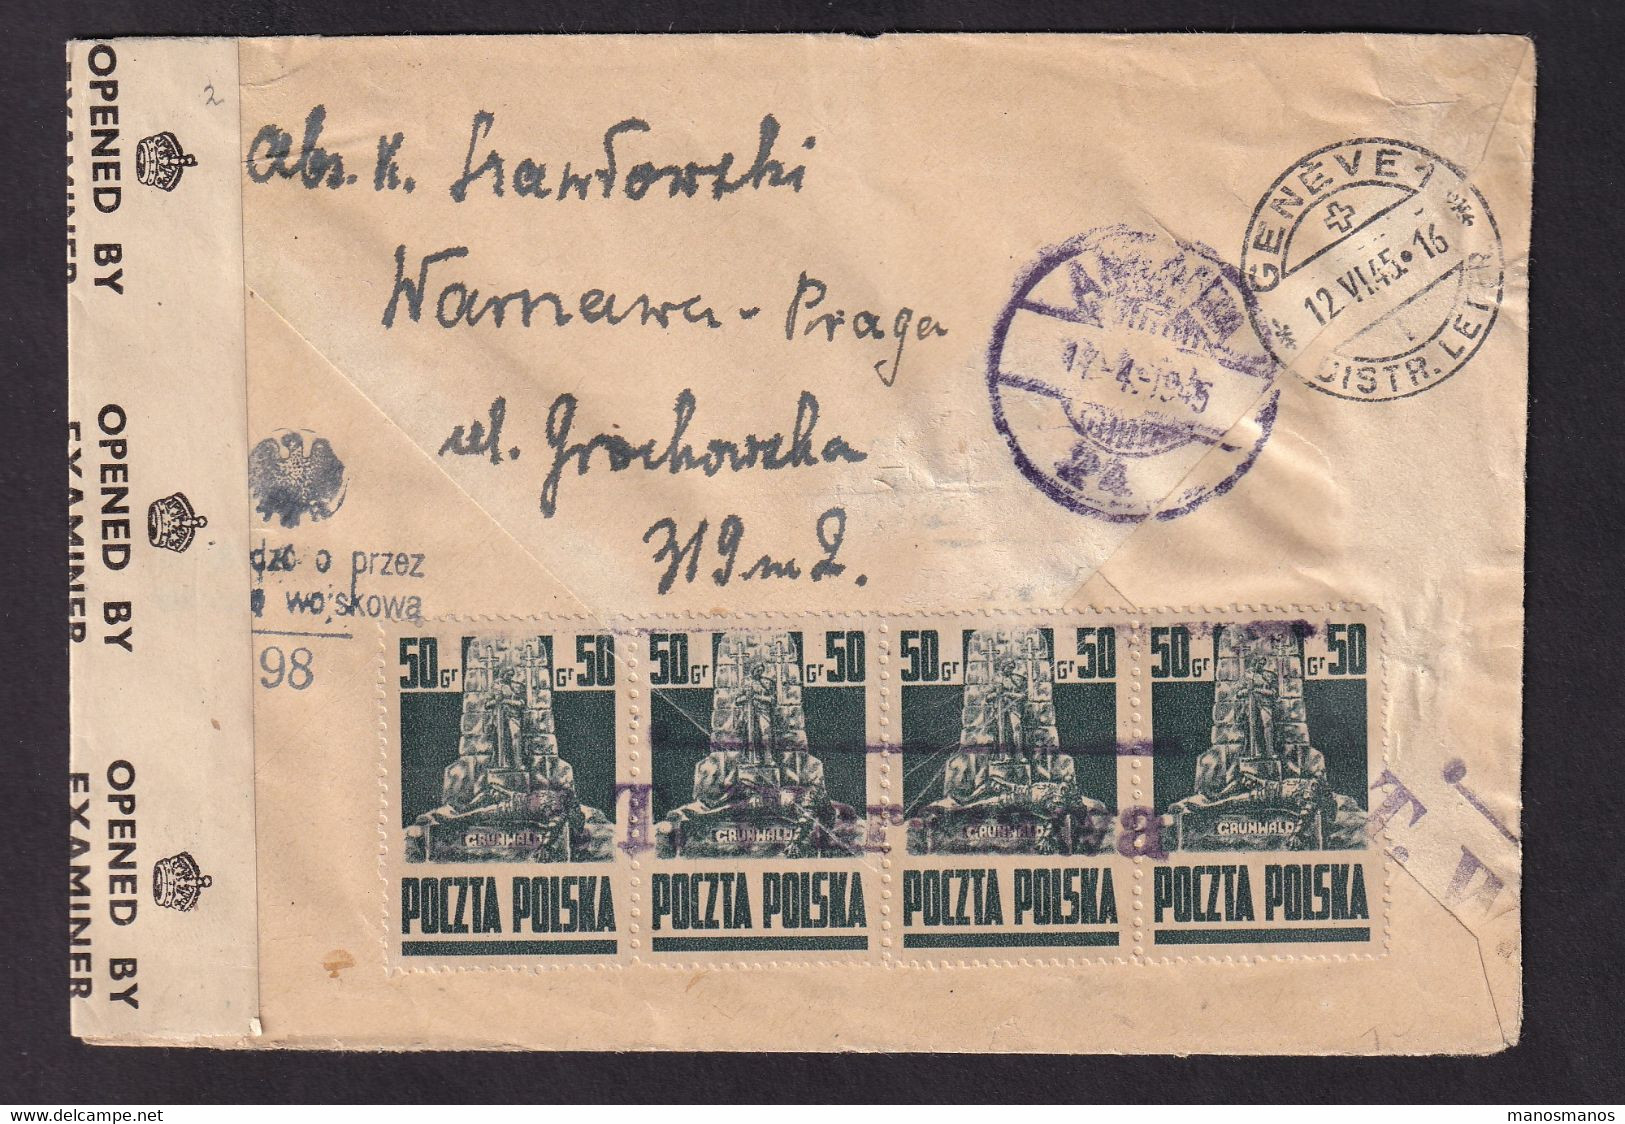 DDBB 633 - Enveloppe Recommandée WARSZAWA 1945 Vers Croix Rouge De GENEVE Suisse Via ANKARA - Censures Pologne Et UK - Verschlussmarken Der Befreiung